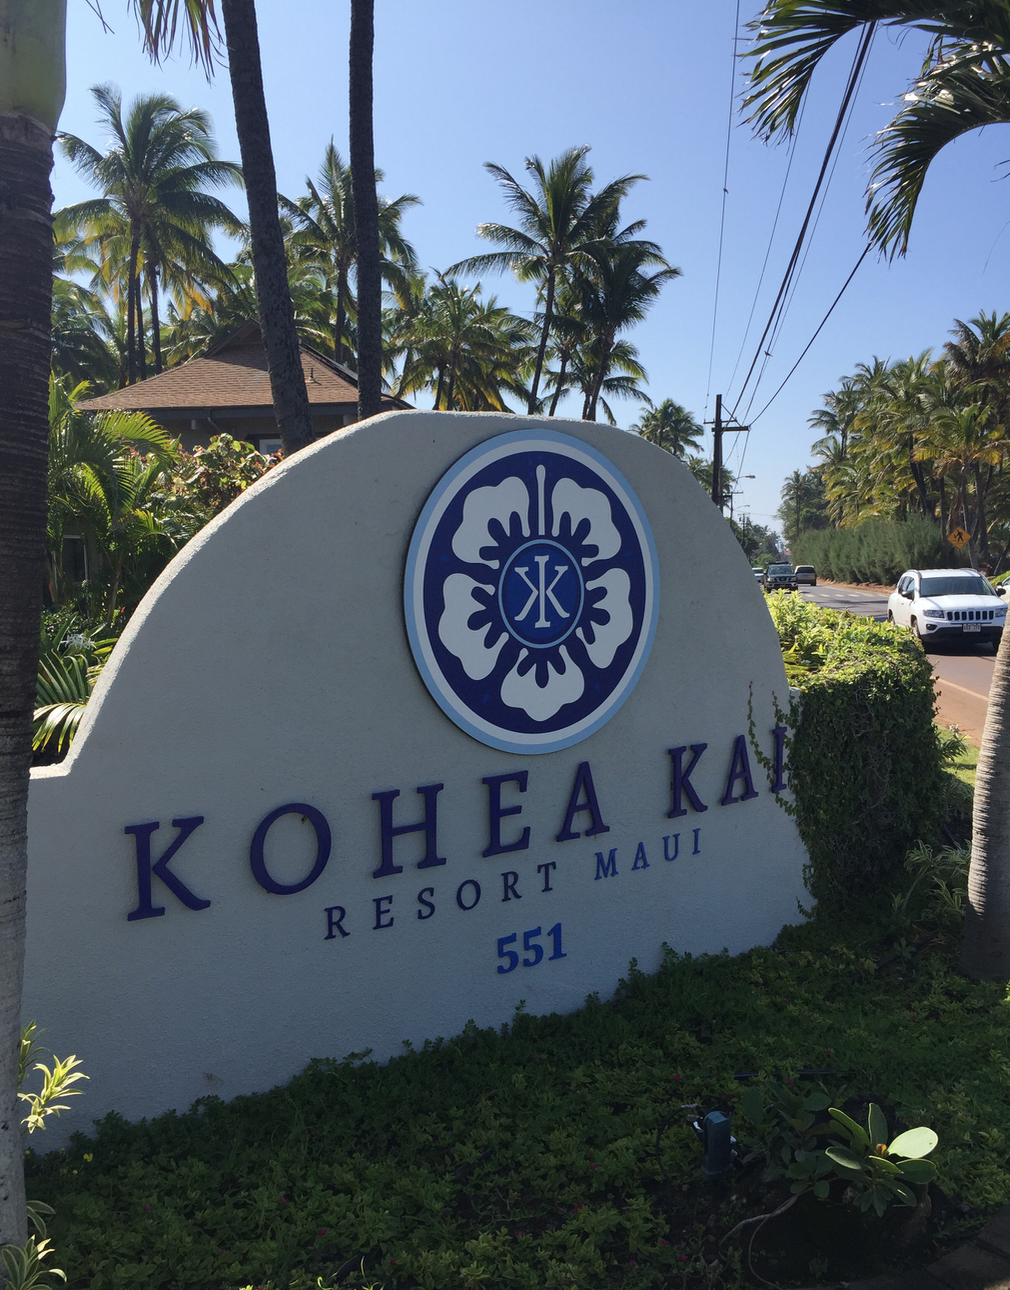 Kohea Kai Resort - Kihei, Maui - How To Spend 48 Hours On Maui